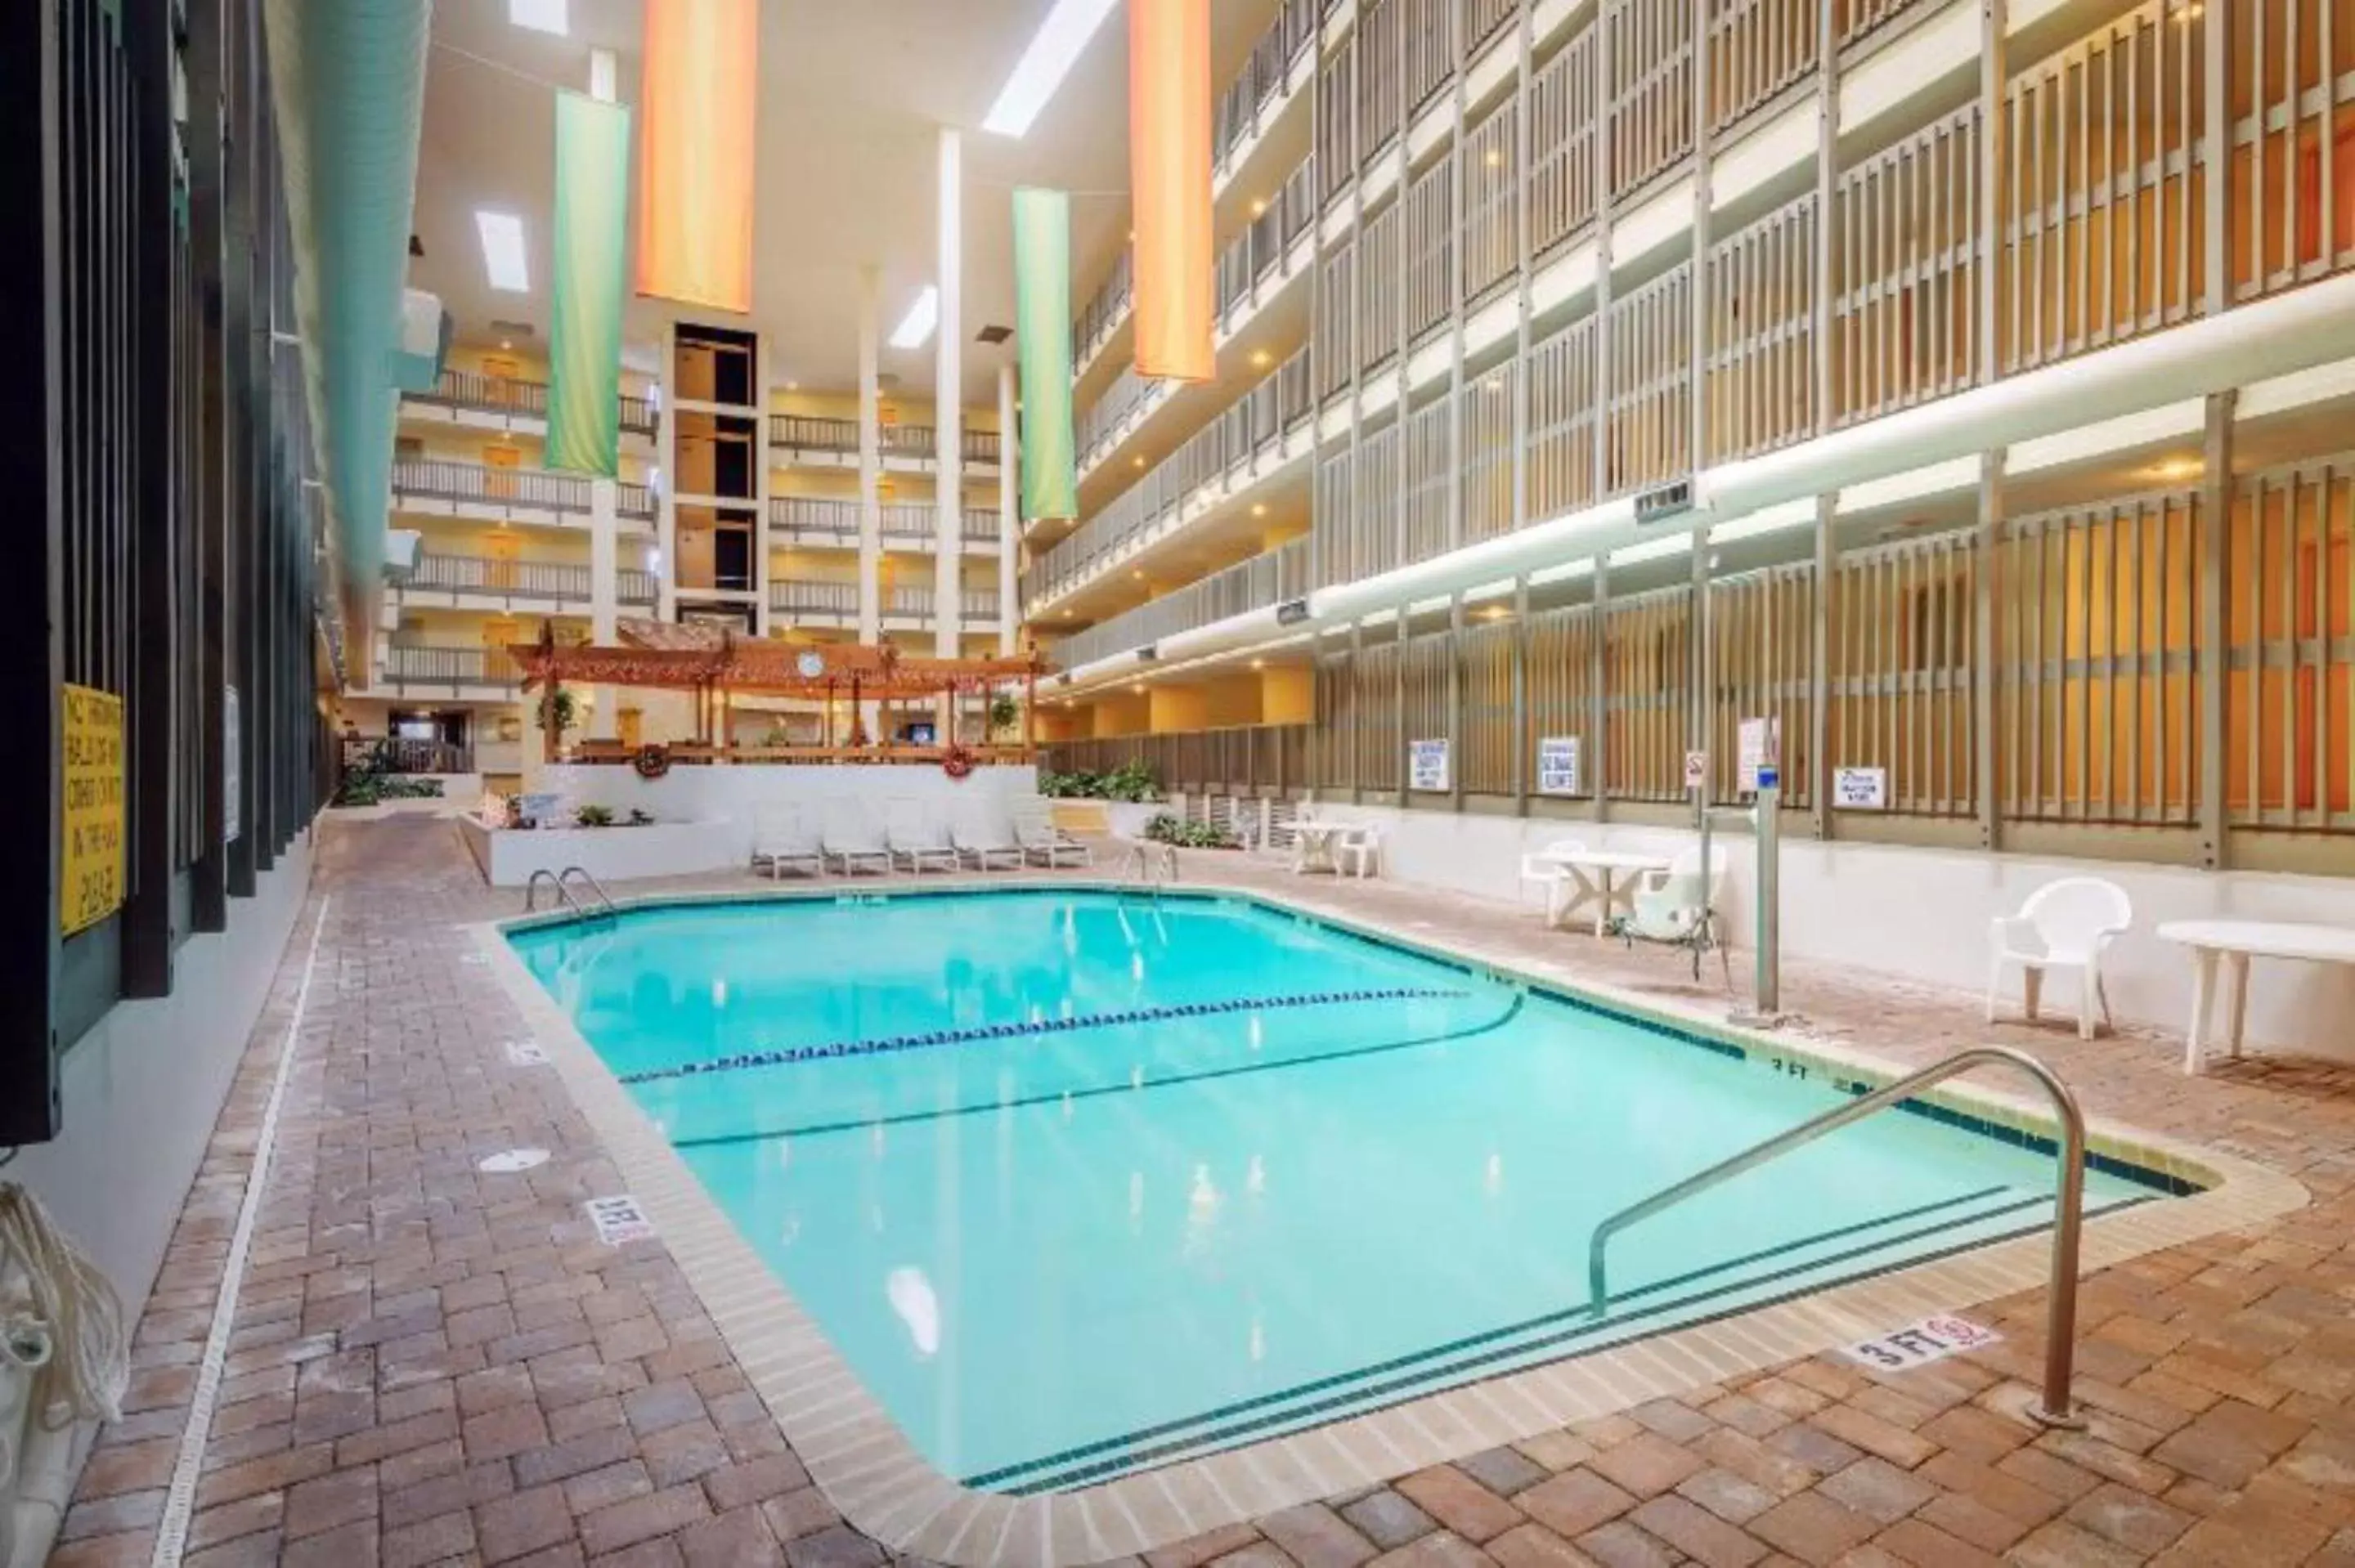 Swimming Pool in Myrtle Beach Resort